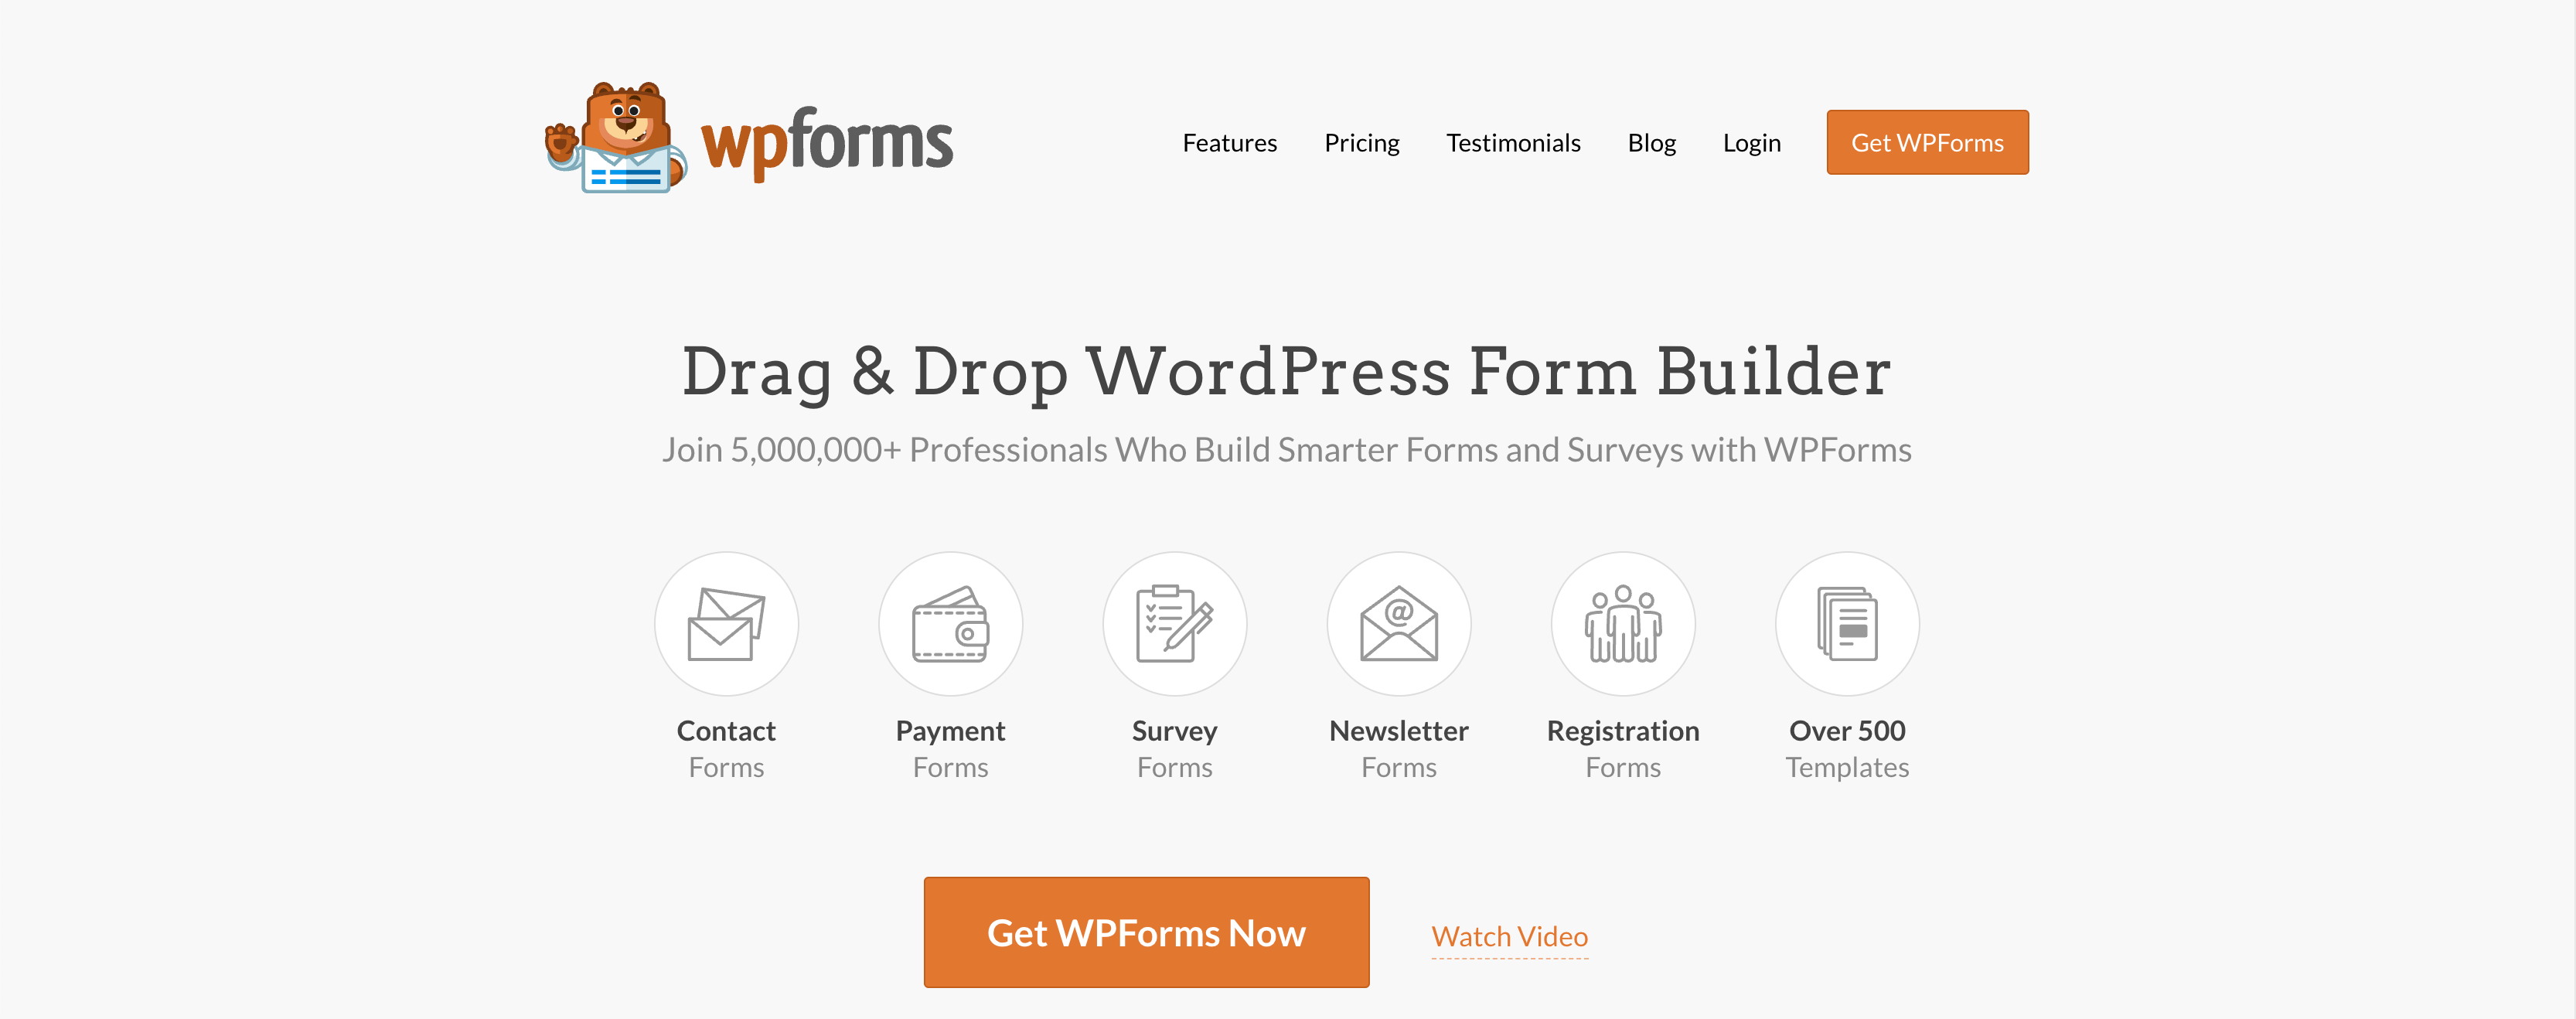 WPForms Home Page 2023